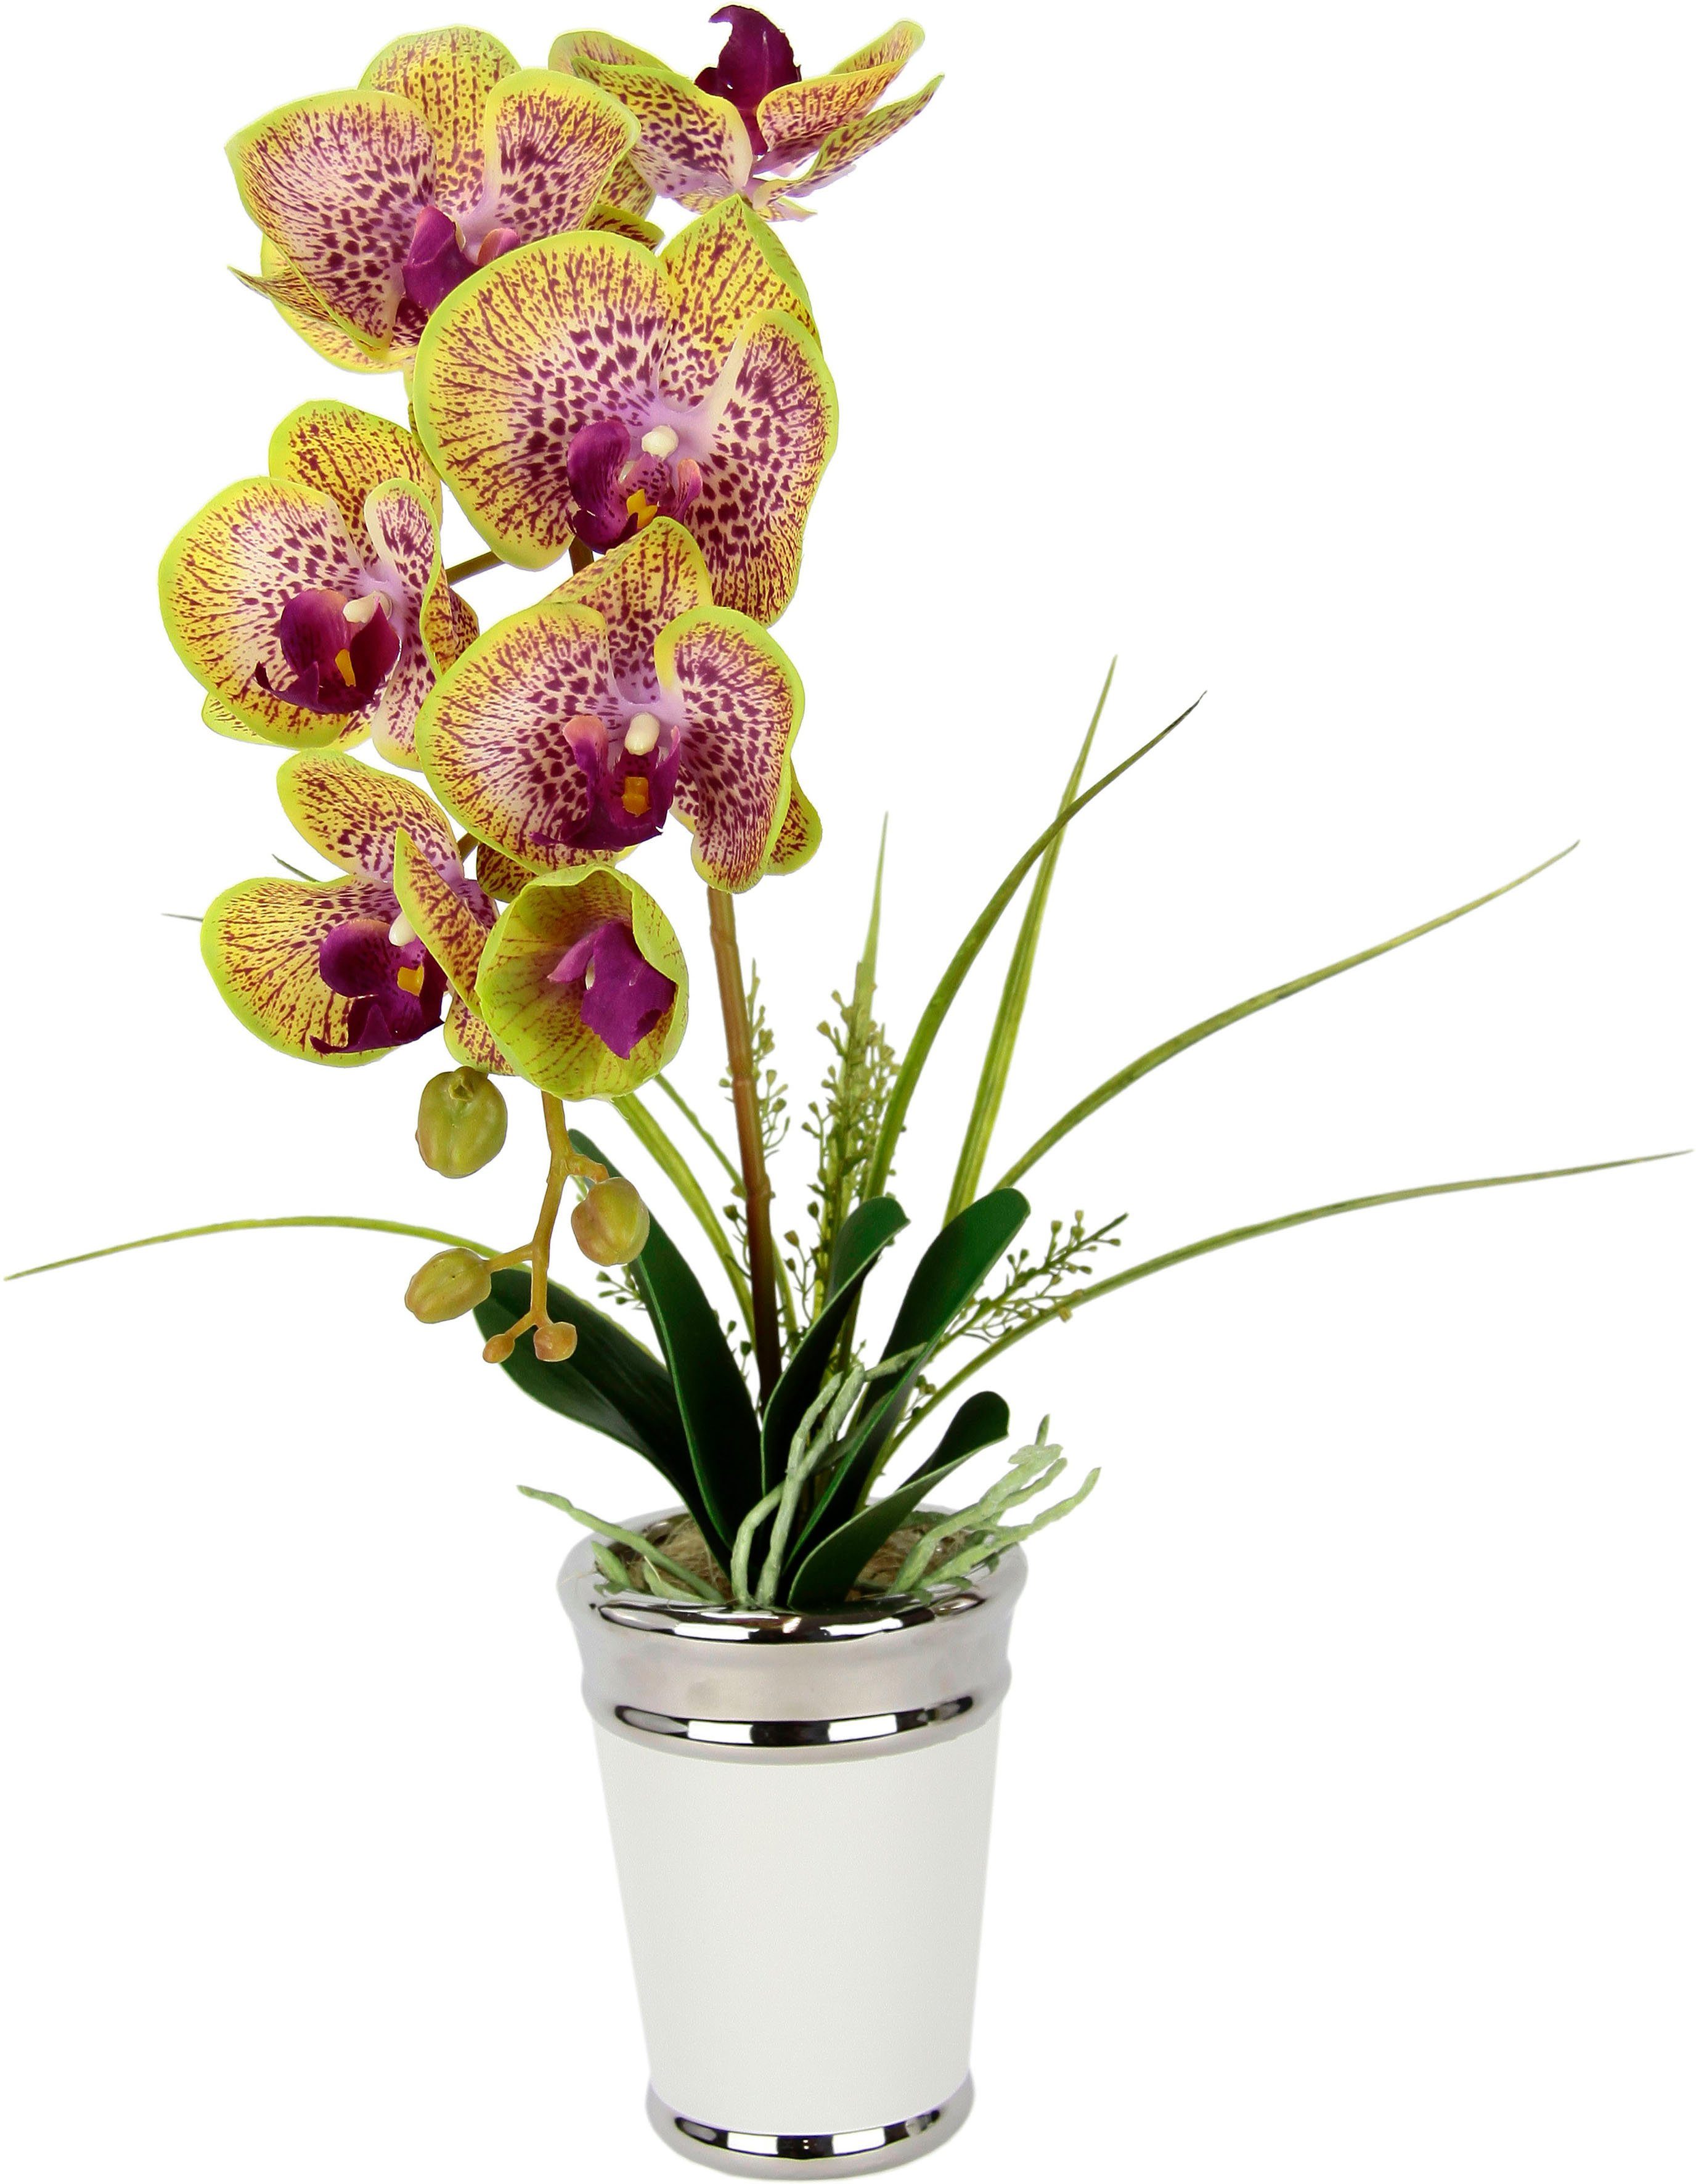 Kunstblume Orchidee, I.GE.A., Höhe 52 cm, im Topf, aus Keramik, Seidenblume Real Touch rosa